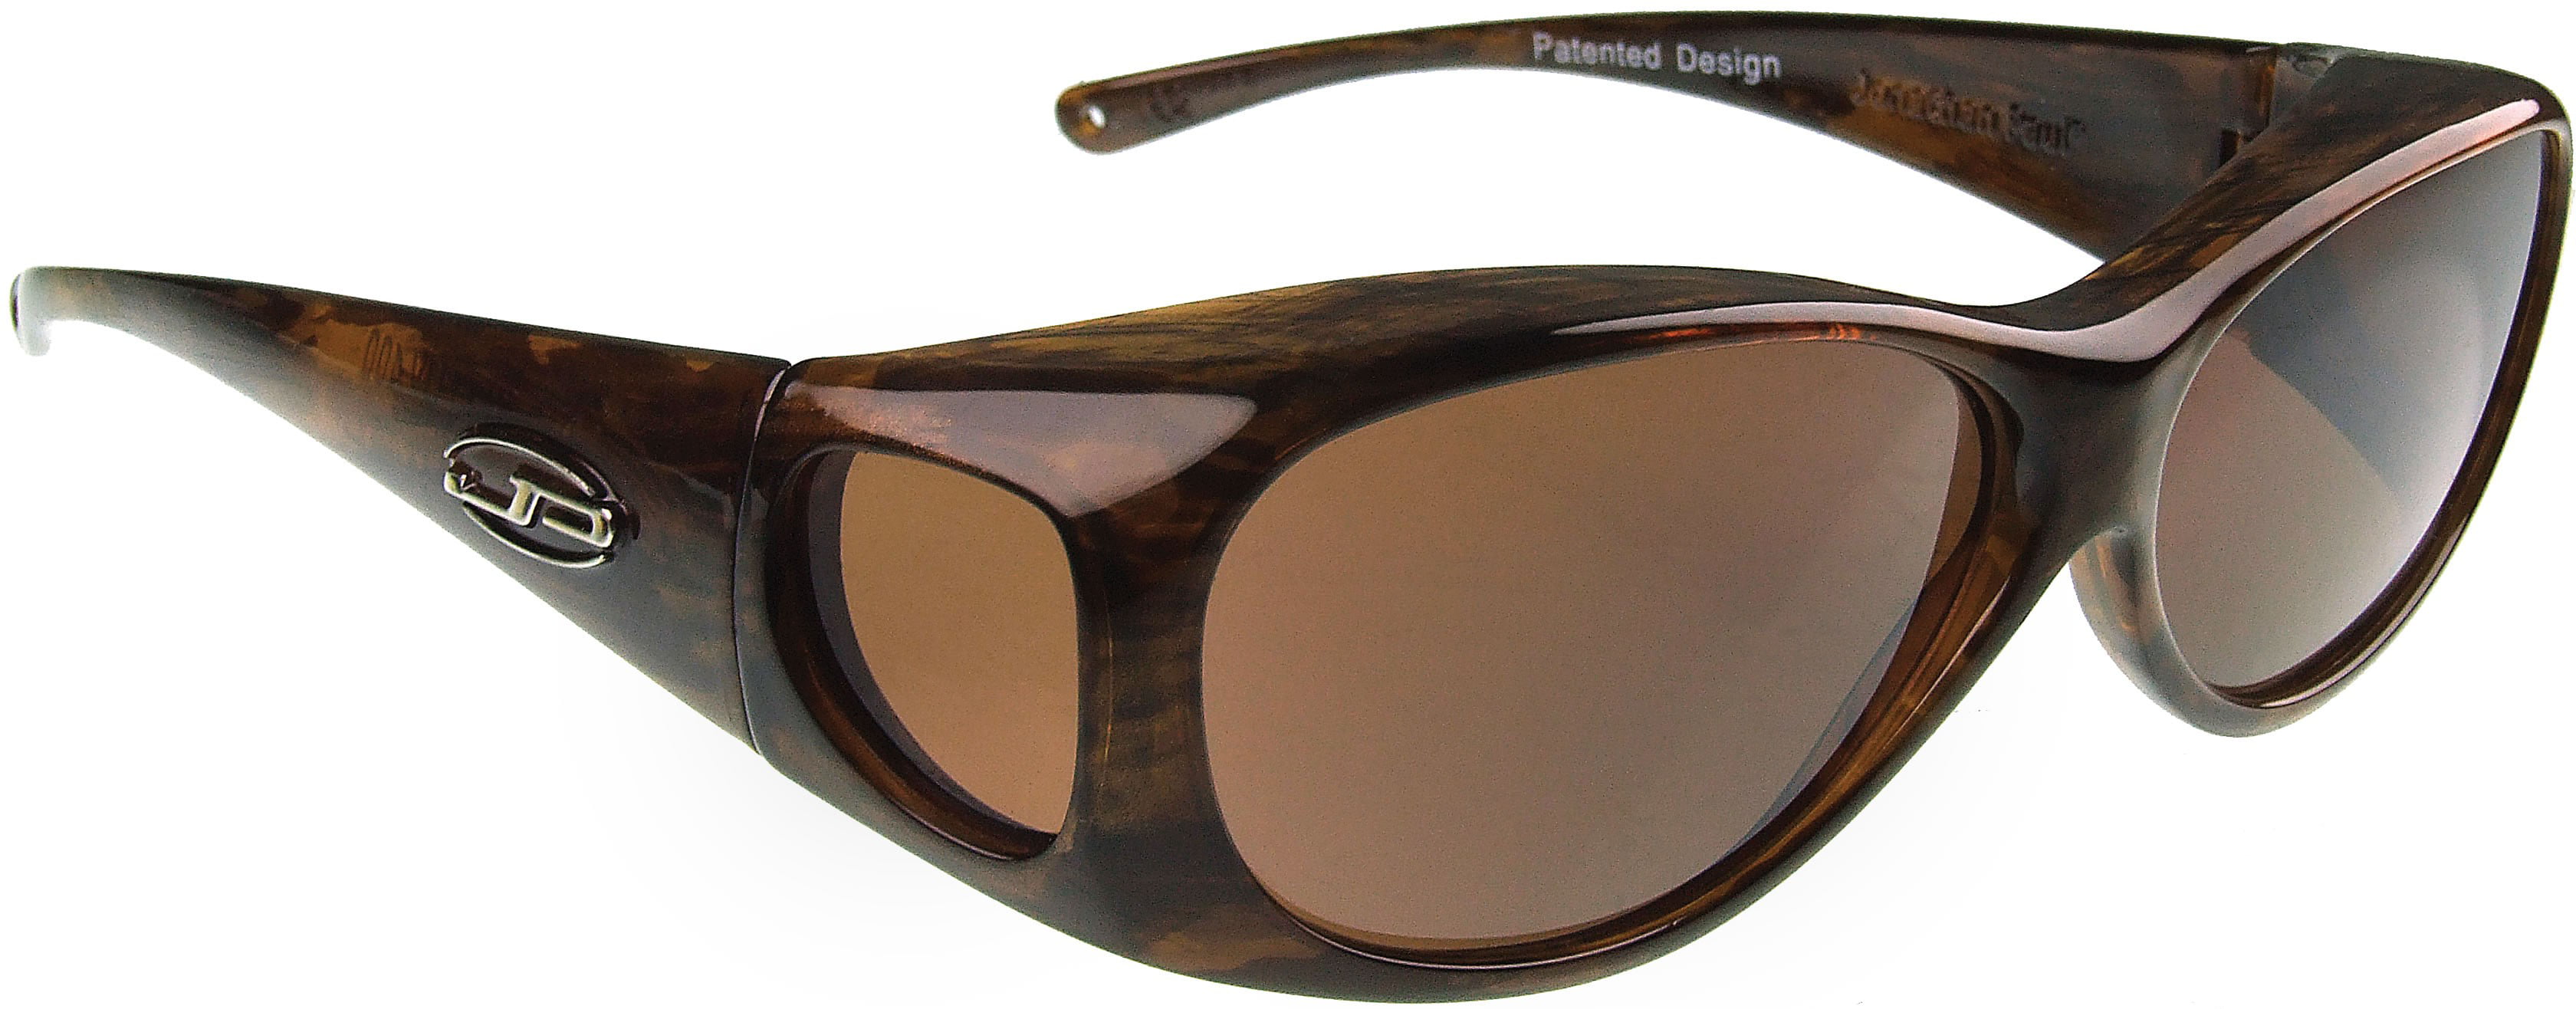 141mm x 40mm Lotus Fitovers Eyewear Sunglasses Medium Fits Over Frames 